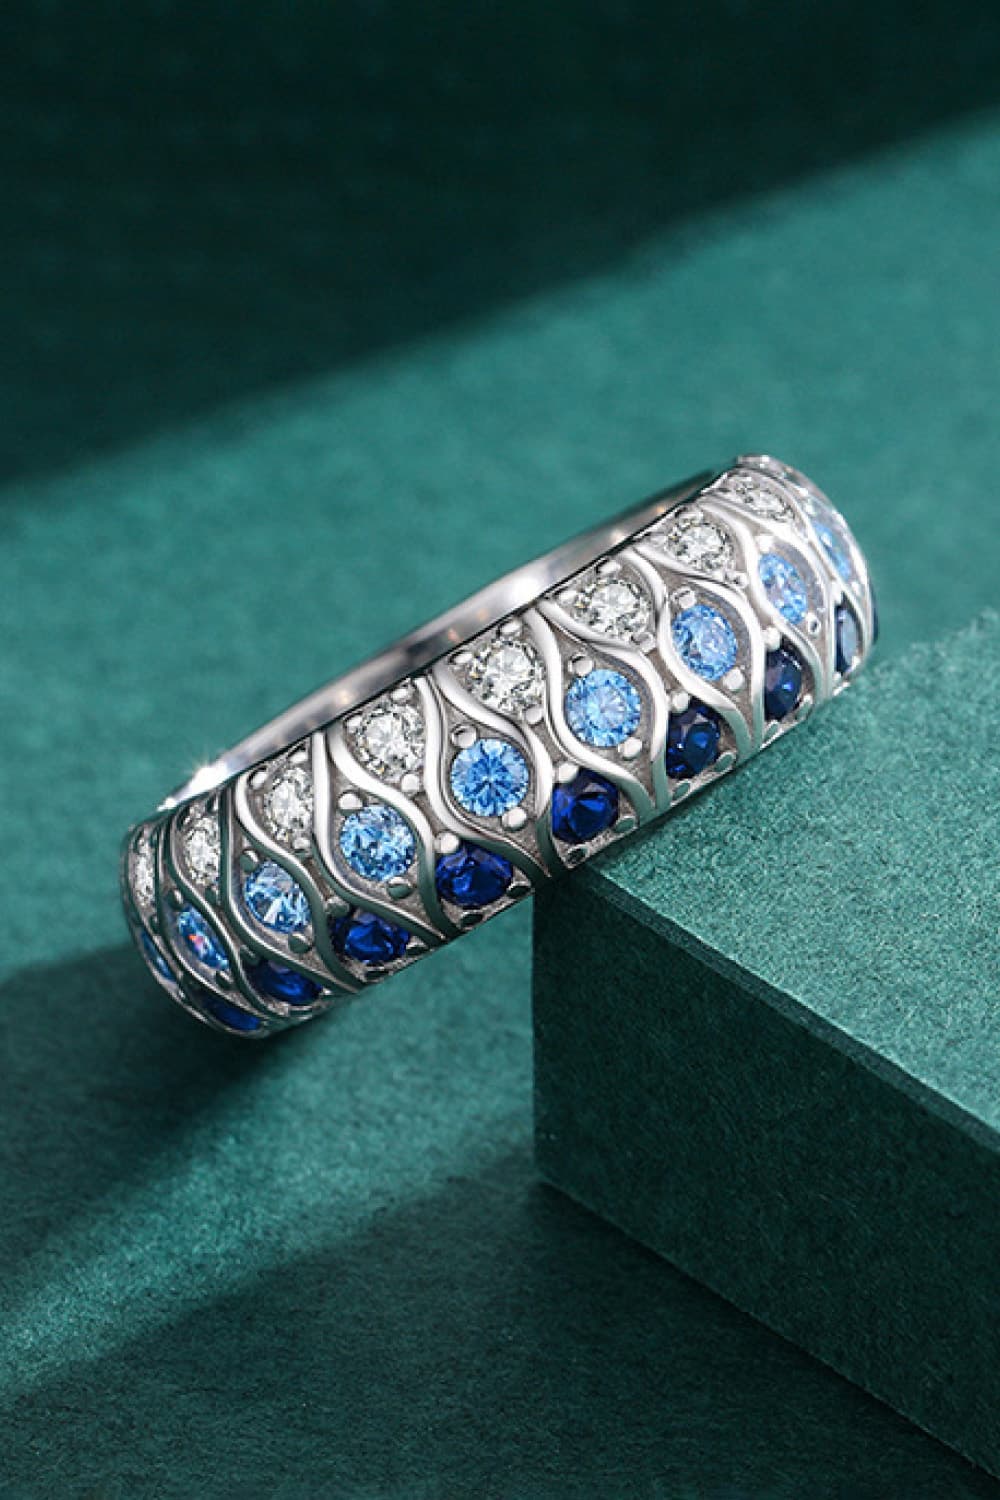 925 Sterling Silver Triple Row Zircon Ring BLUE ZONE PLANET